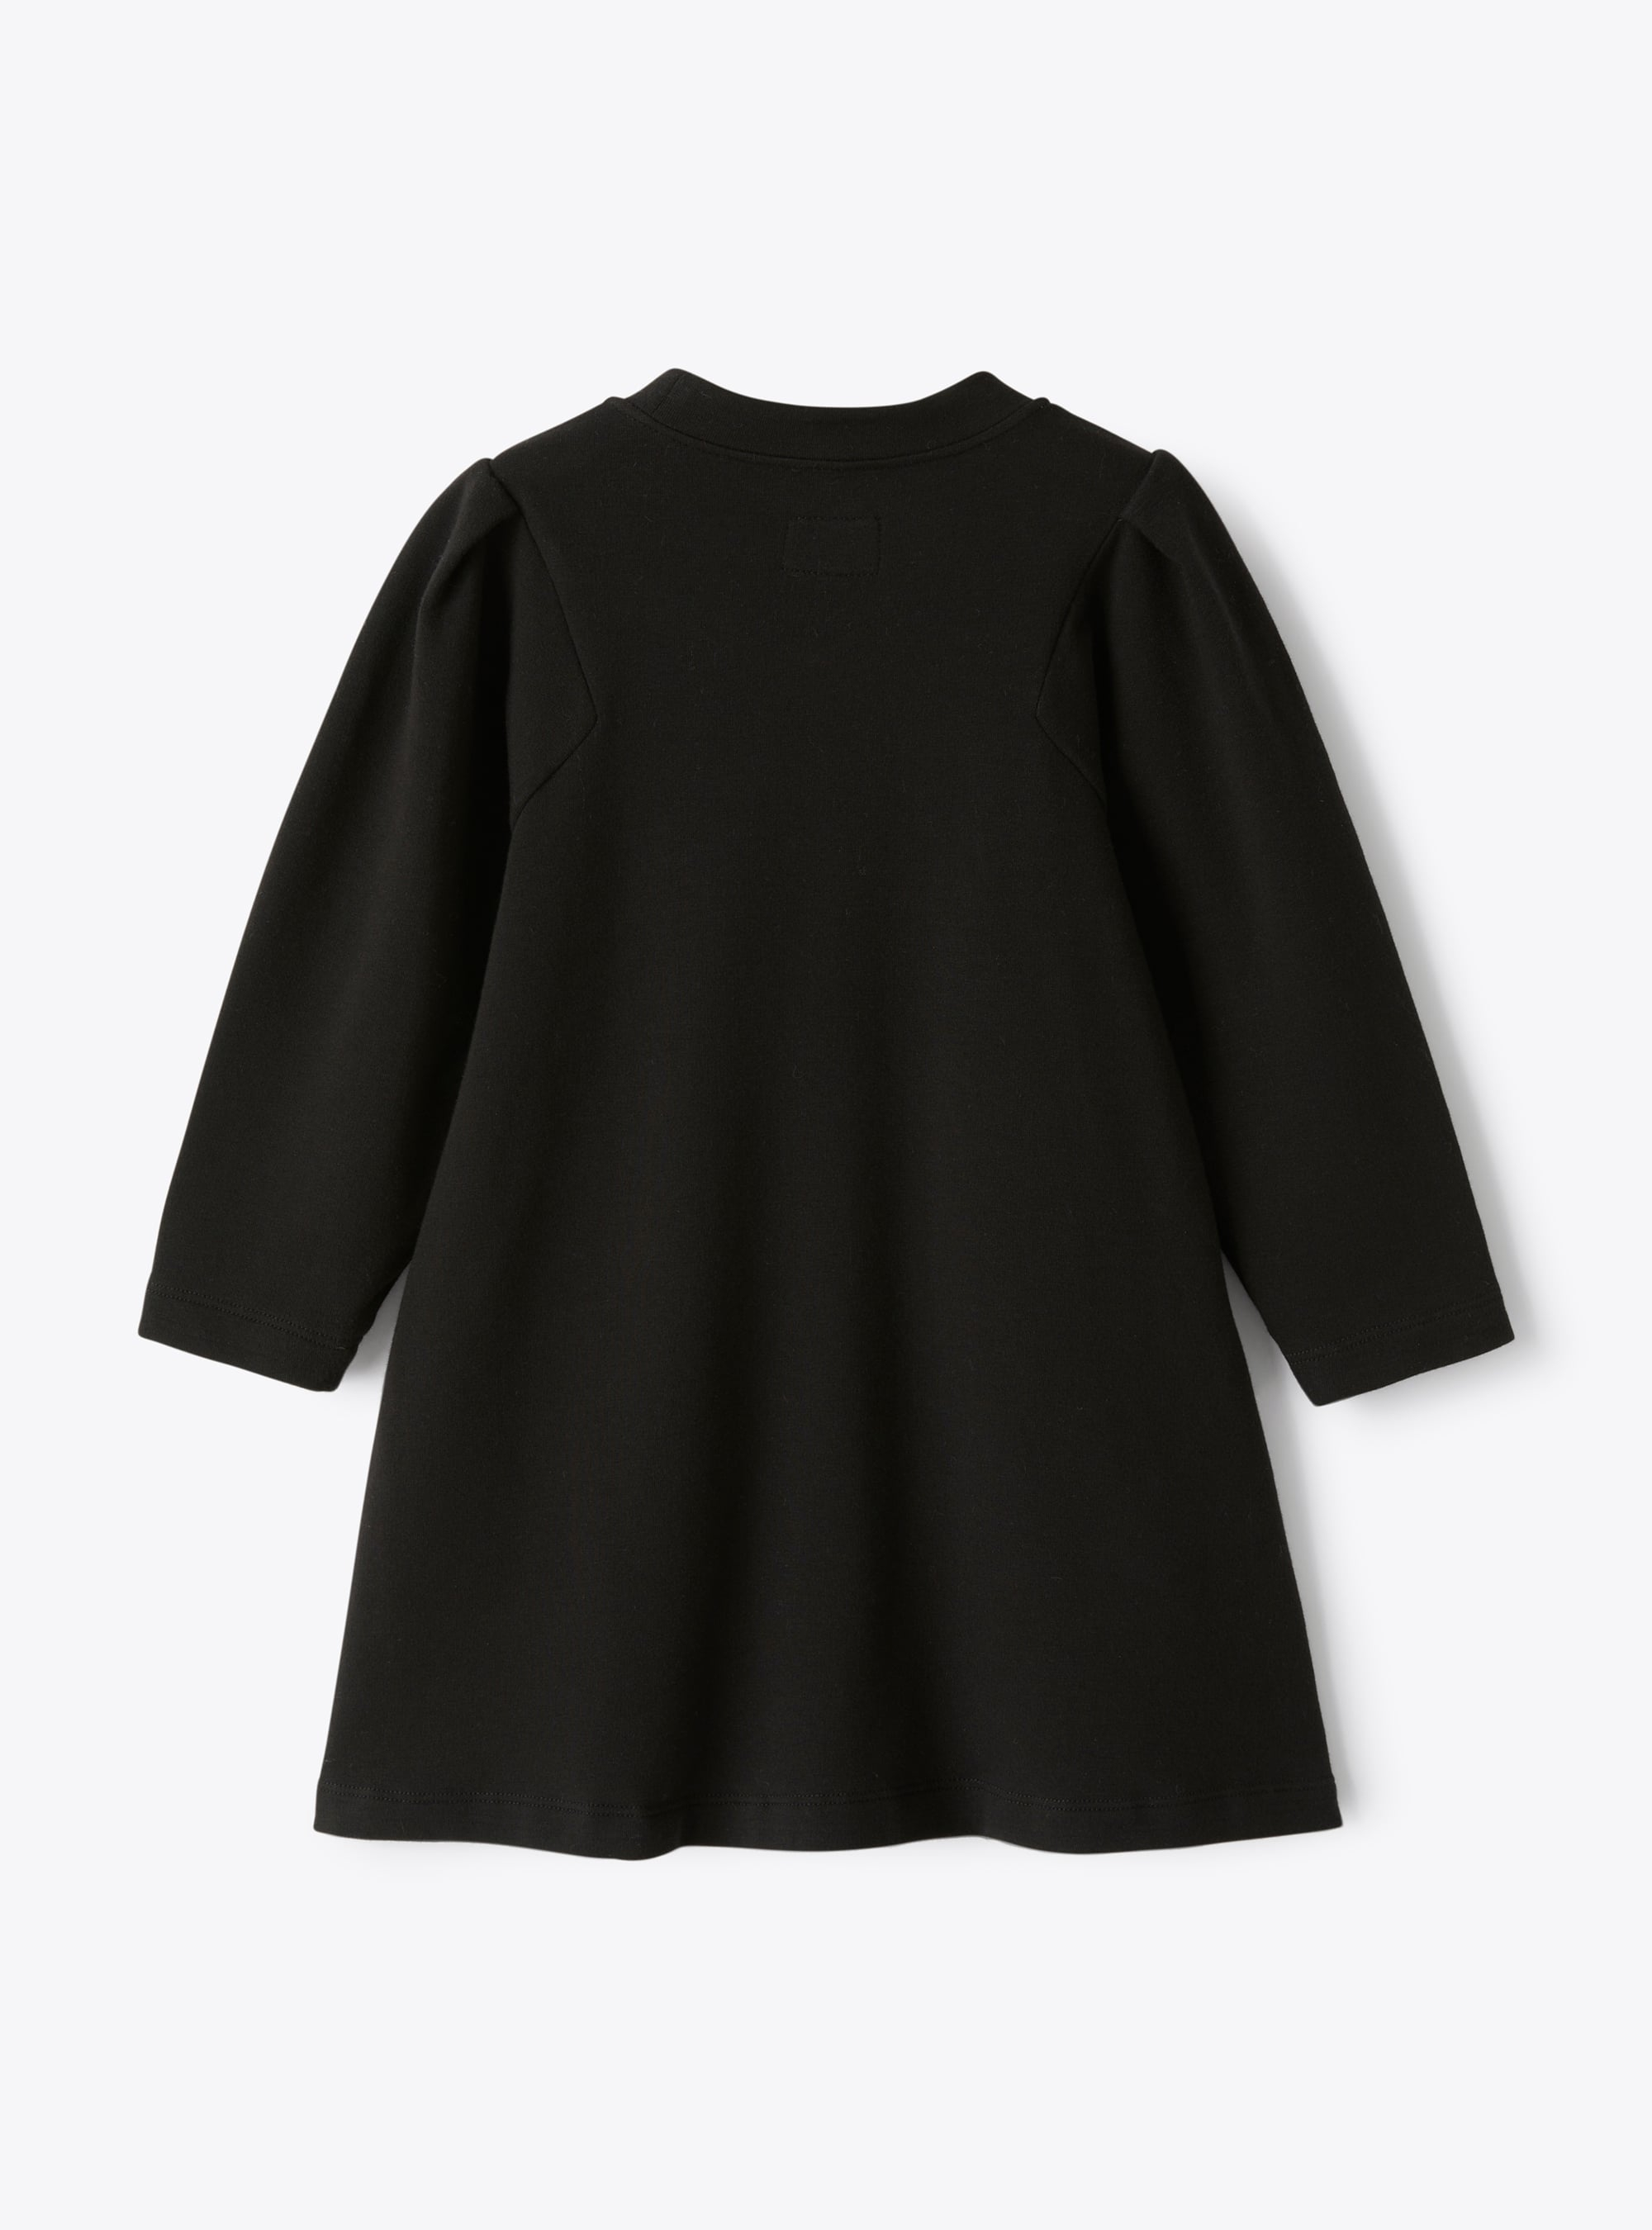 Dress in stretch fleece with floral print design - Black | Il Gufo